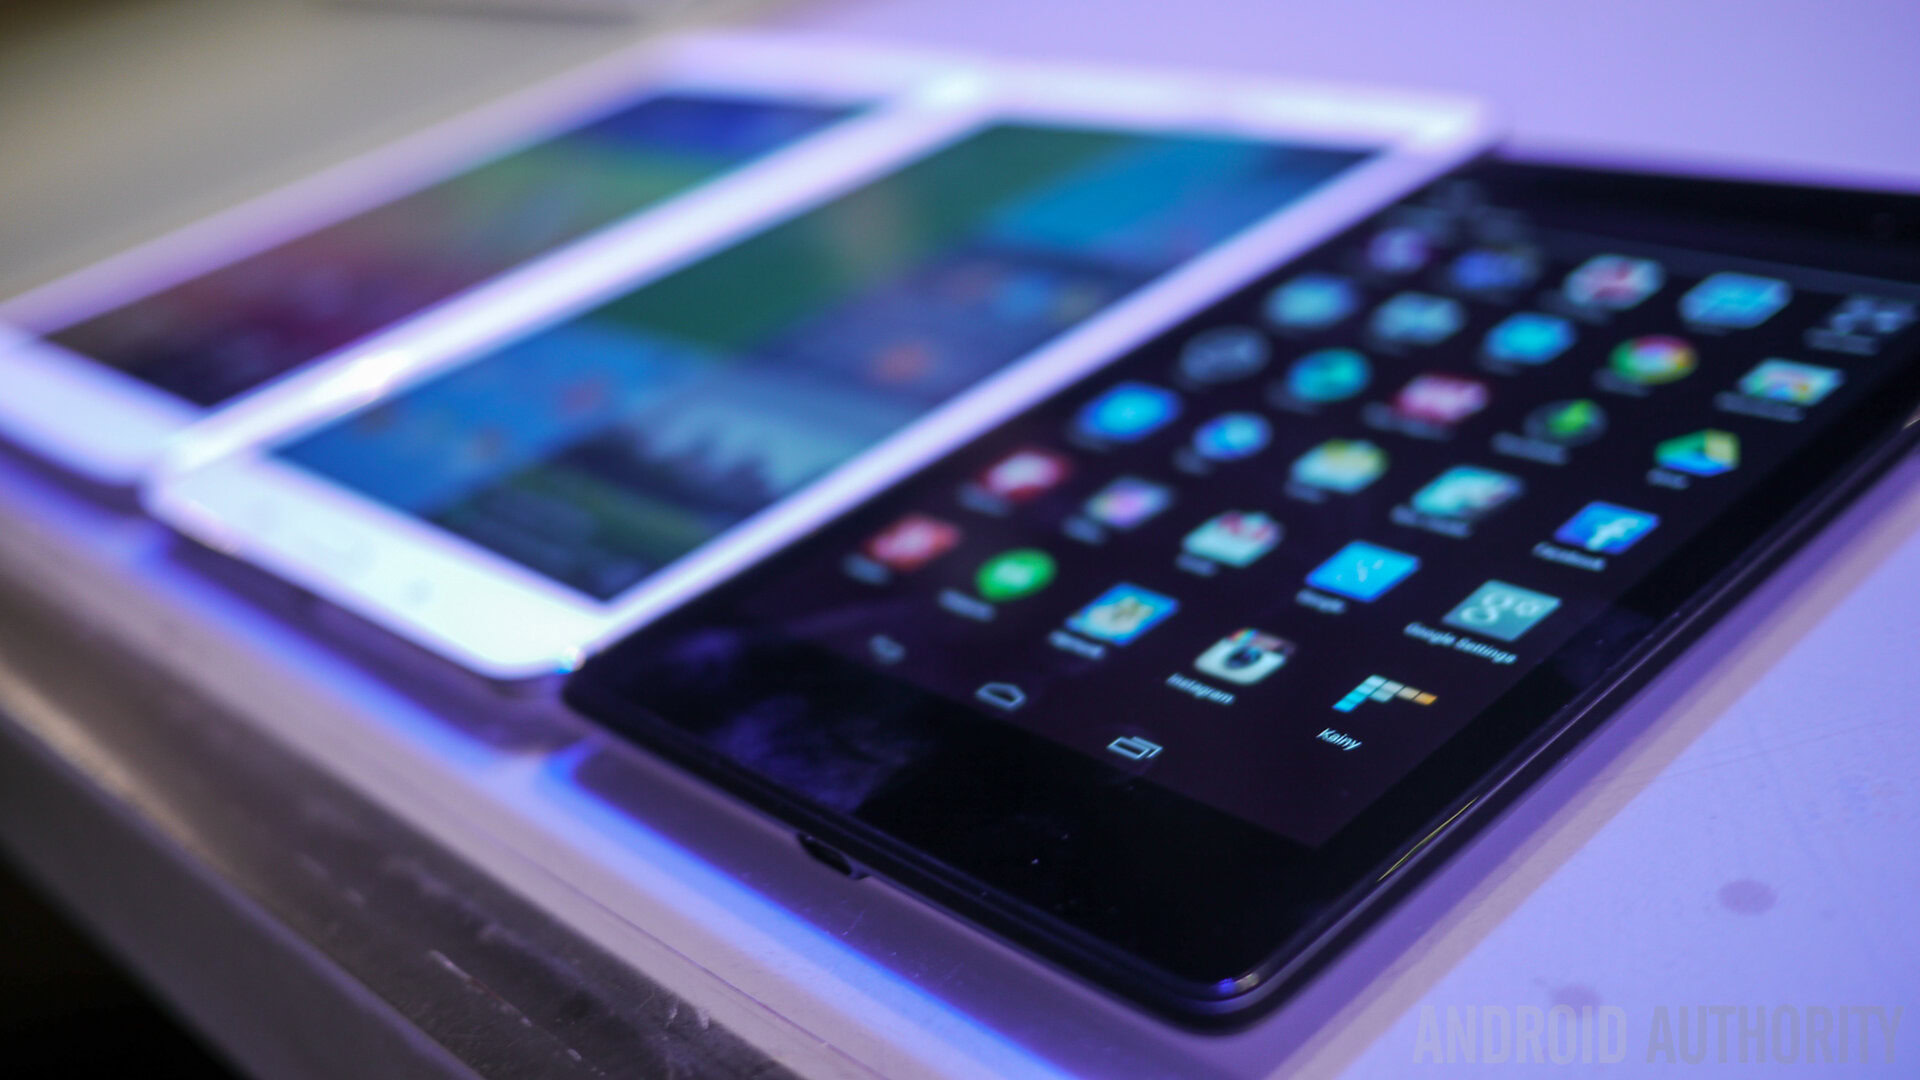 LG-G-PAD-Galaxy-Tablpro-8-4-Nexus7-2013-ces-2014-4